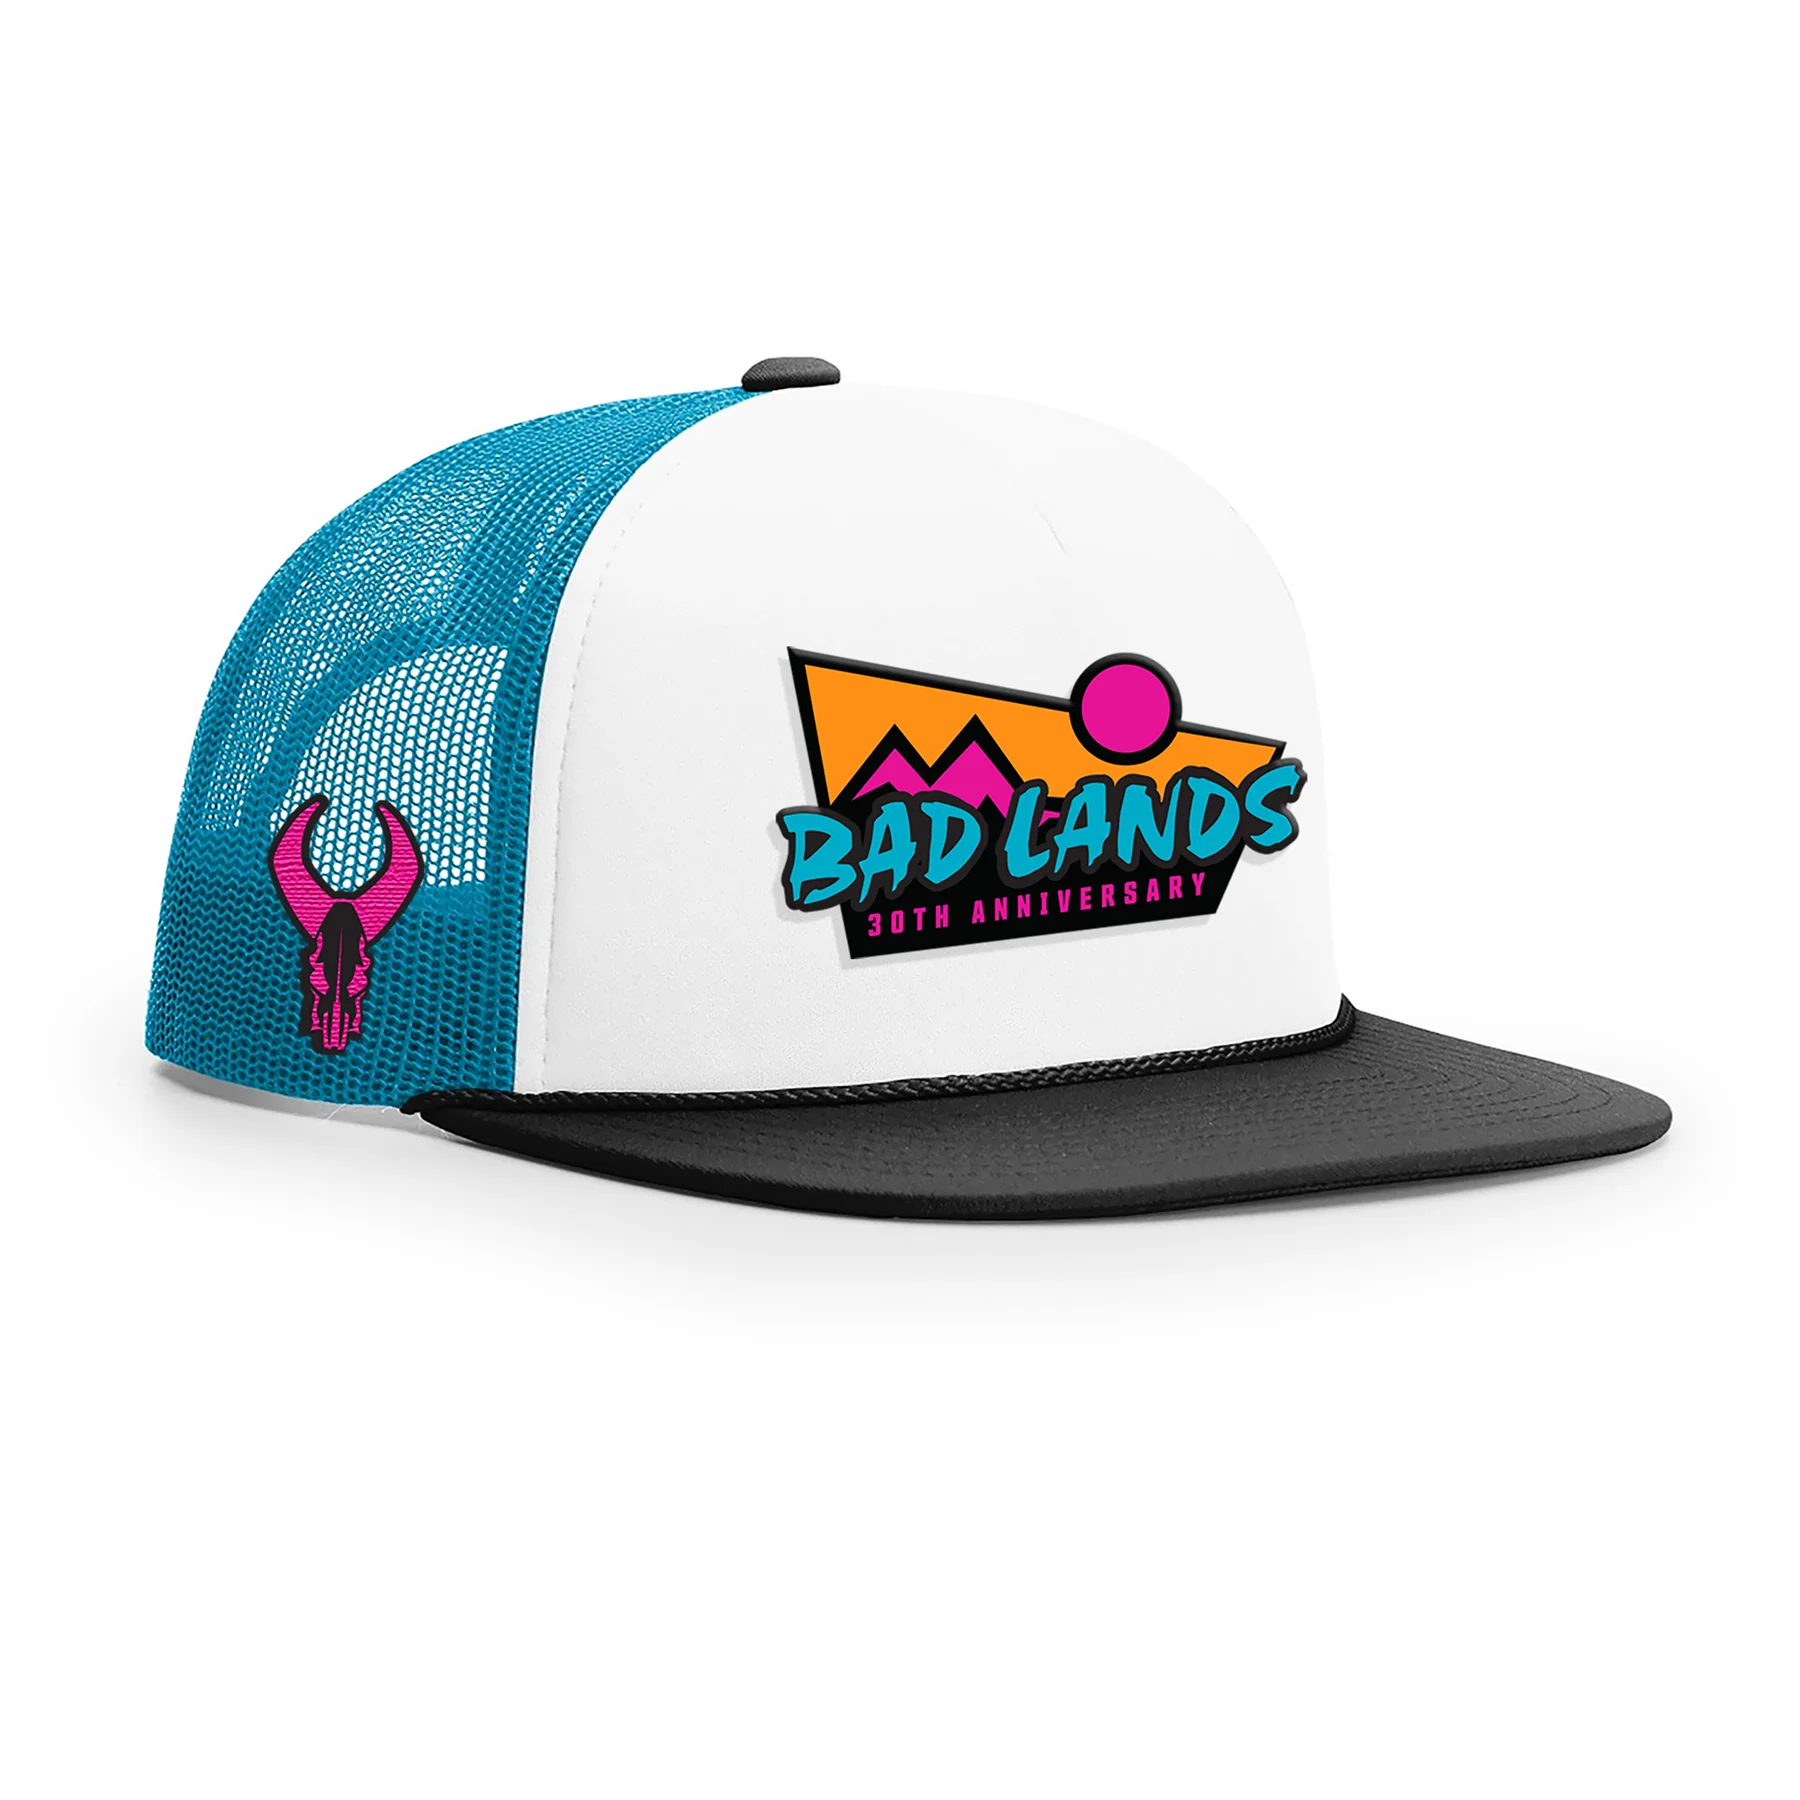 Badlands 30th Anniversary Hat